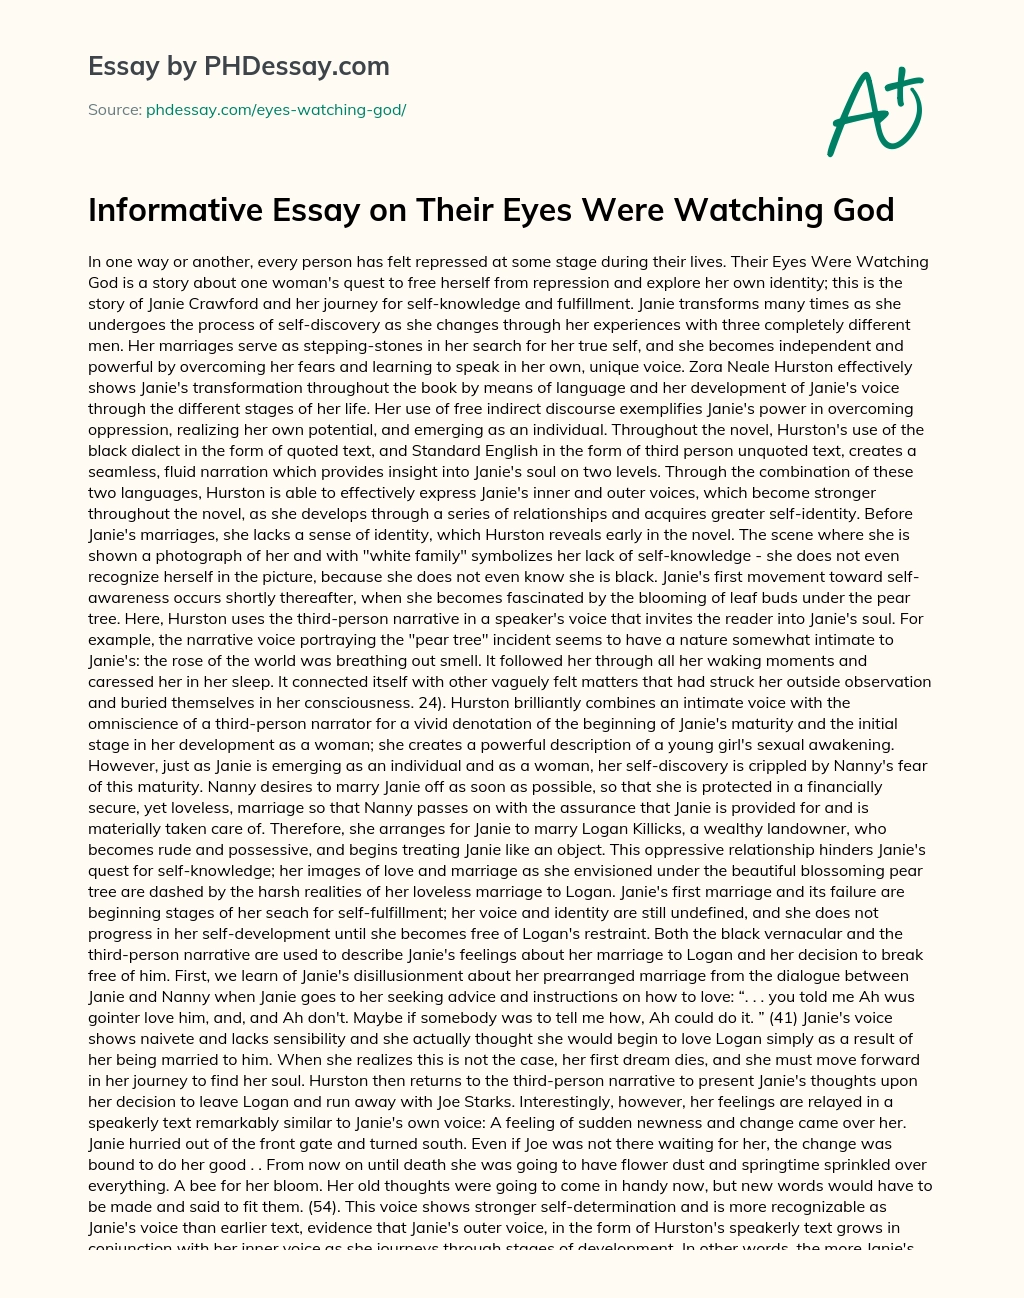 Informative Essay on Their Eyes Were Watching God essay